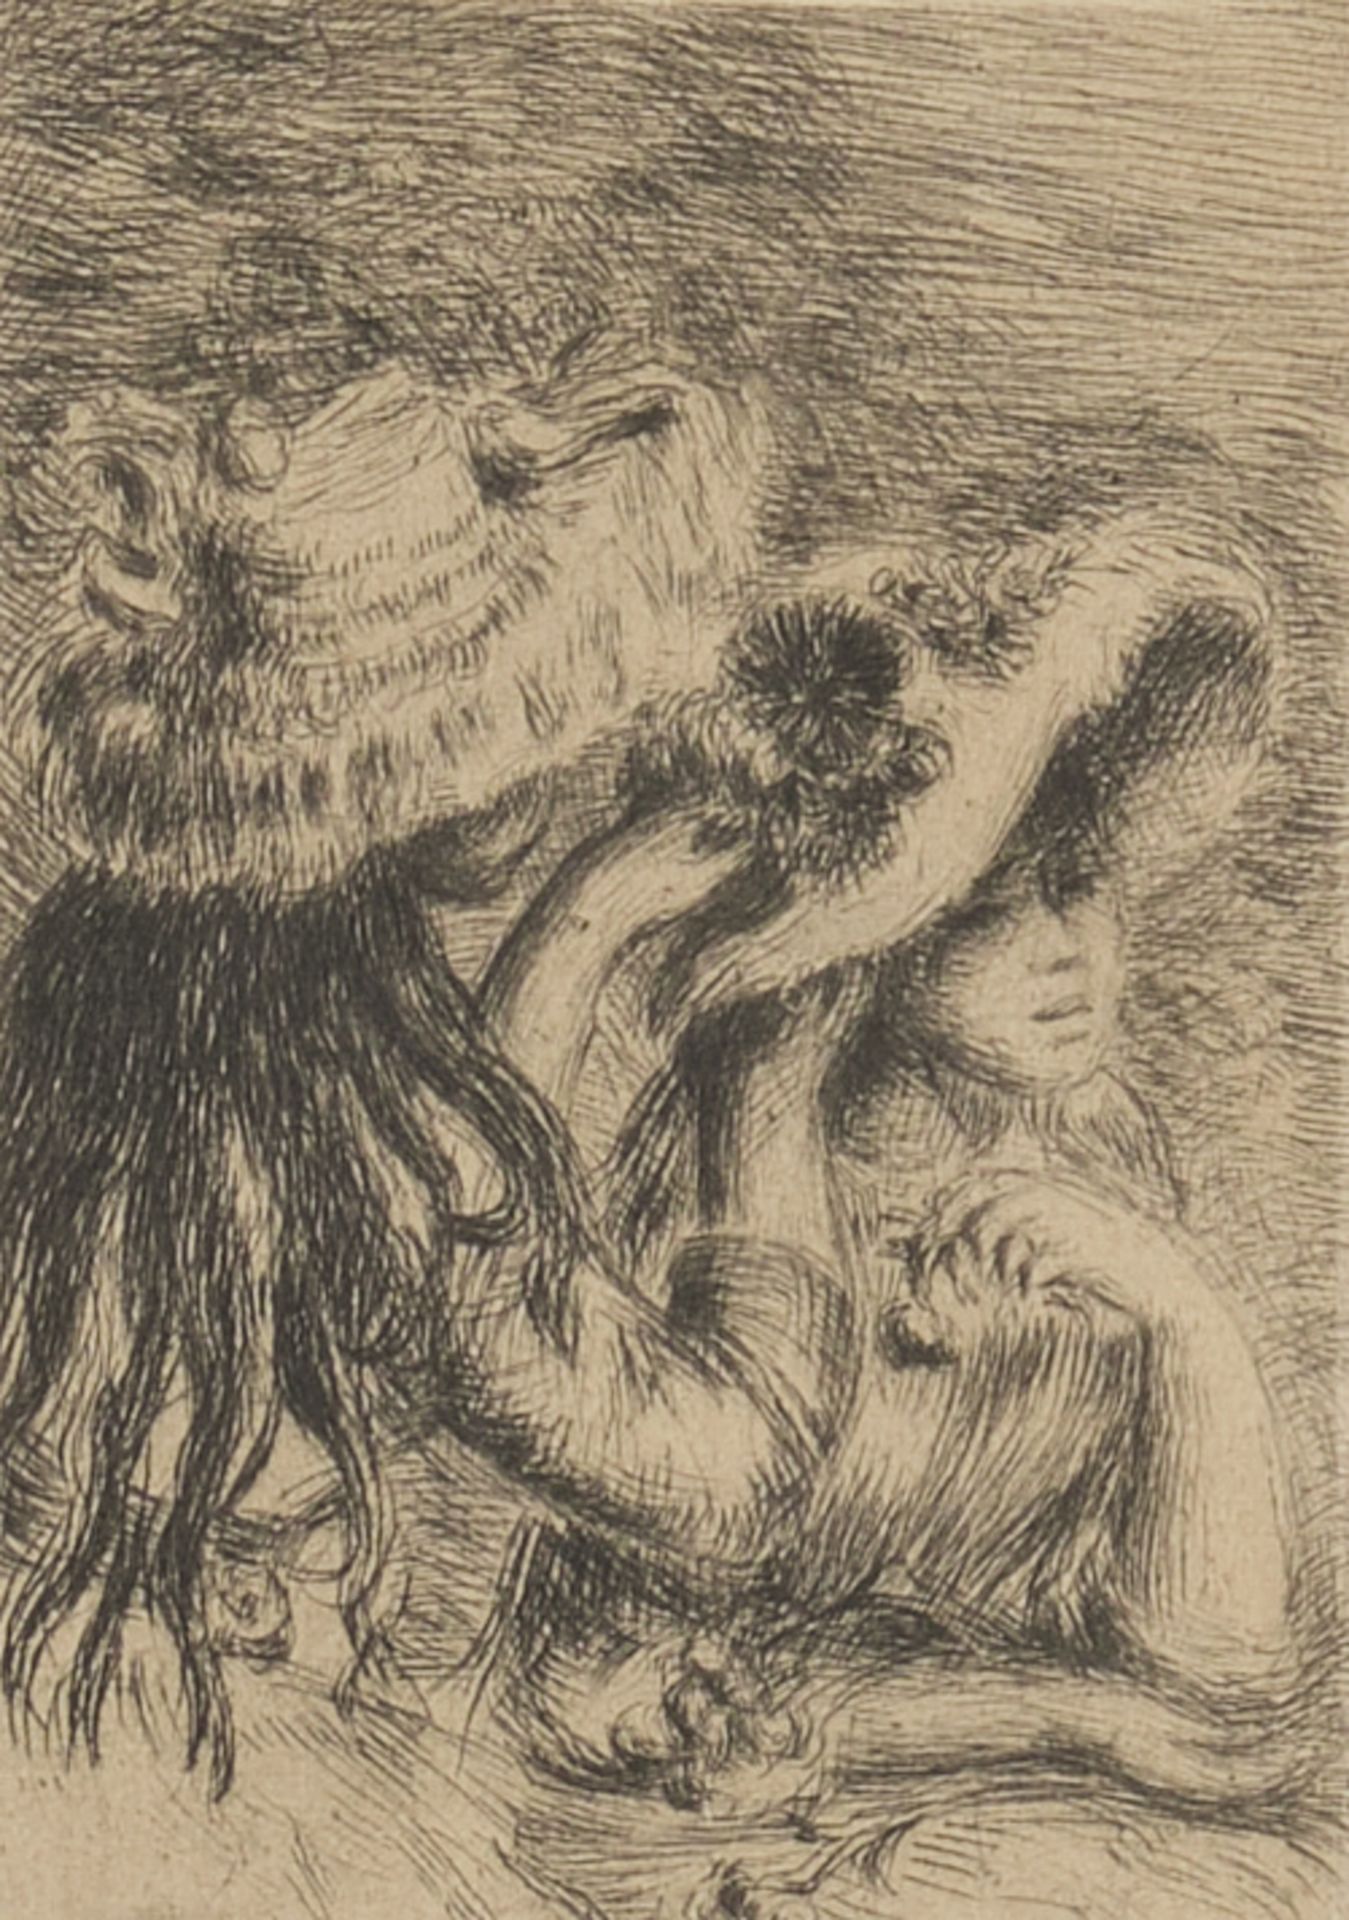 Renoir, Pierre-Auguste (Limoges 1841 - 1919 Cagnes/Nizza, Studium bei Charles Gleyre und Gustave Co